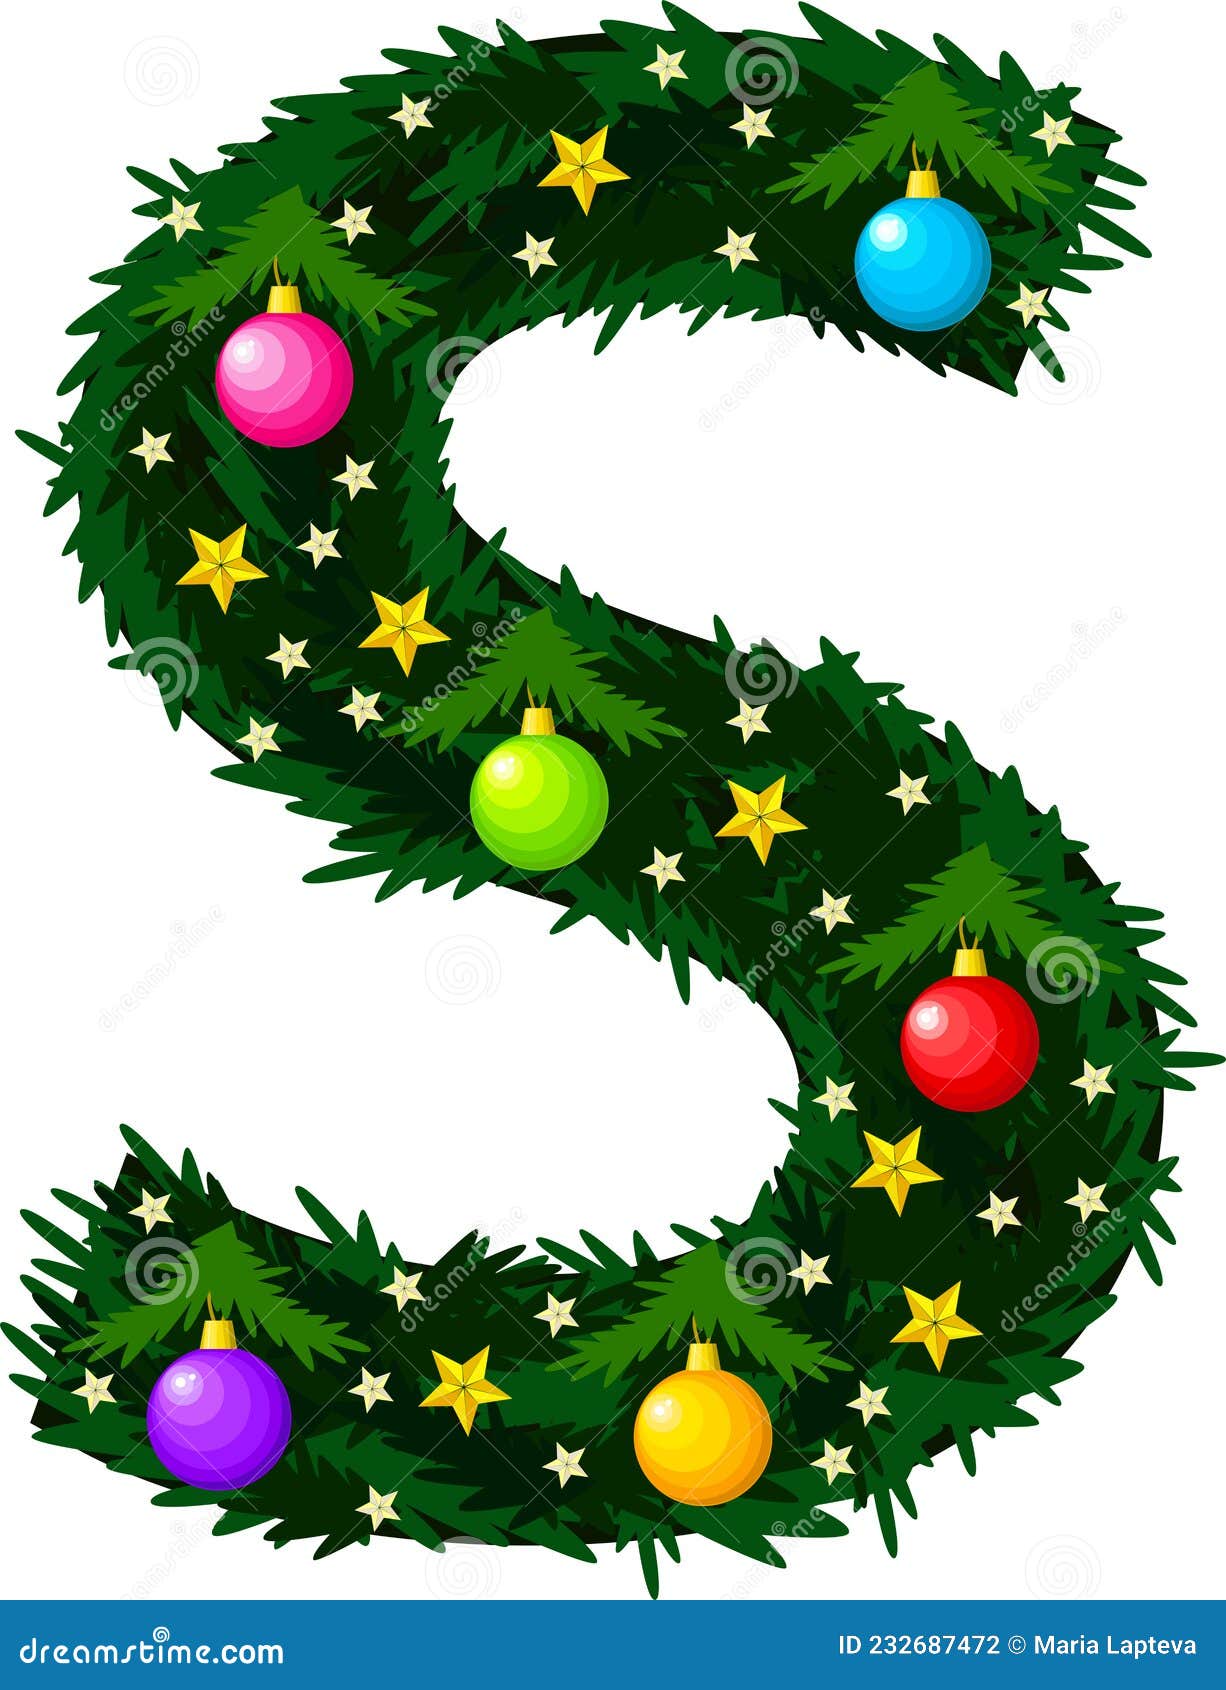 https://thumbs.dreamstime.com/z/letter-s-font-form-christmas-tree-winter-alphabet-made-decorations-balls-stars-232687472.jpg